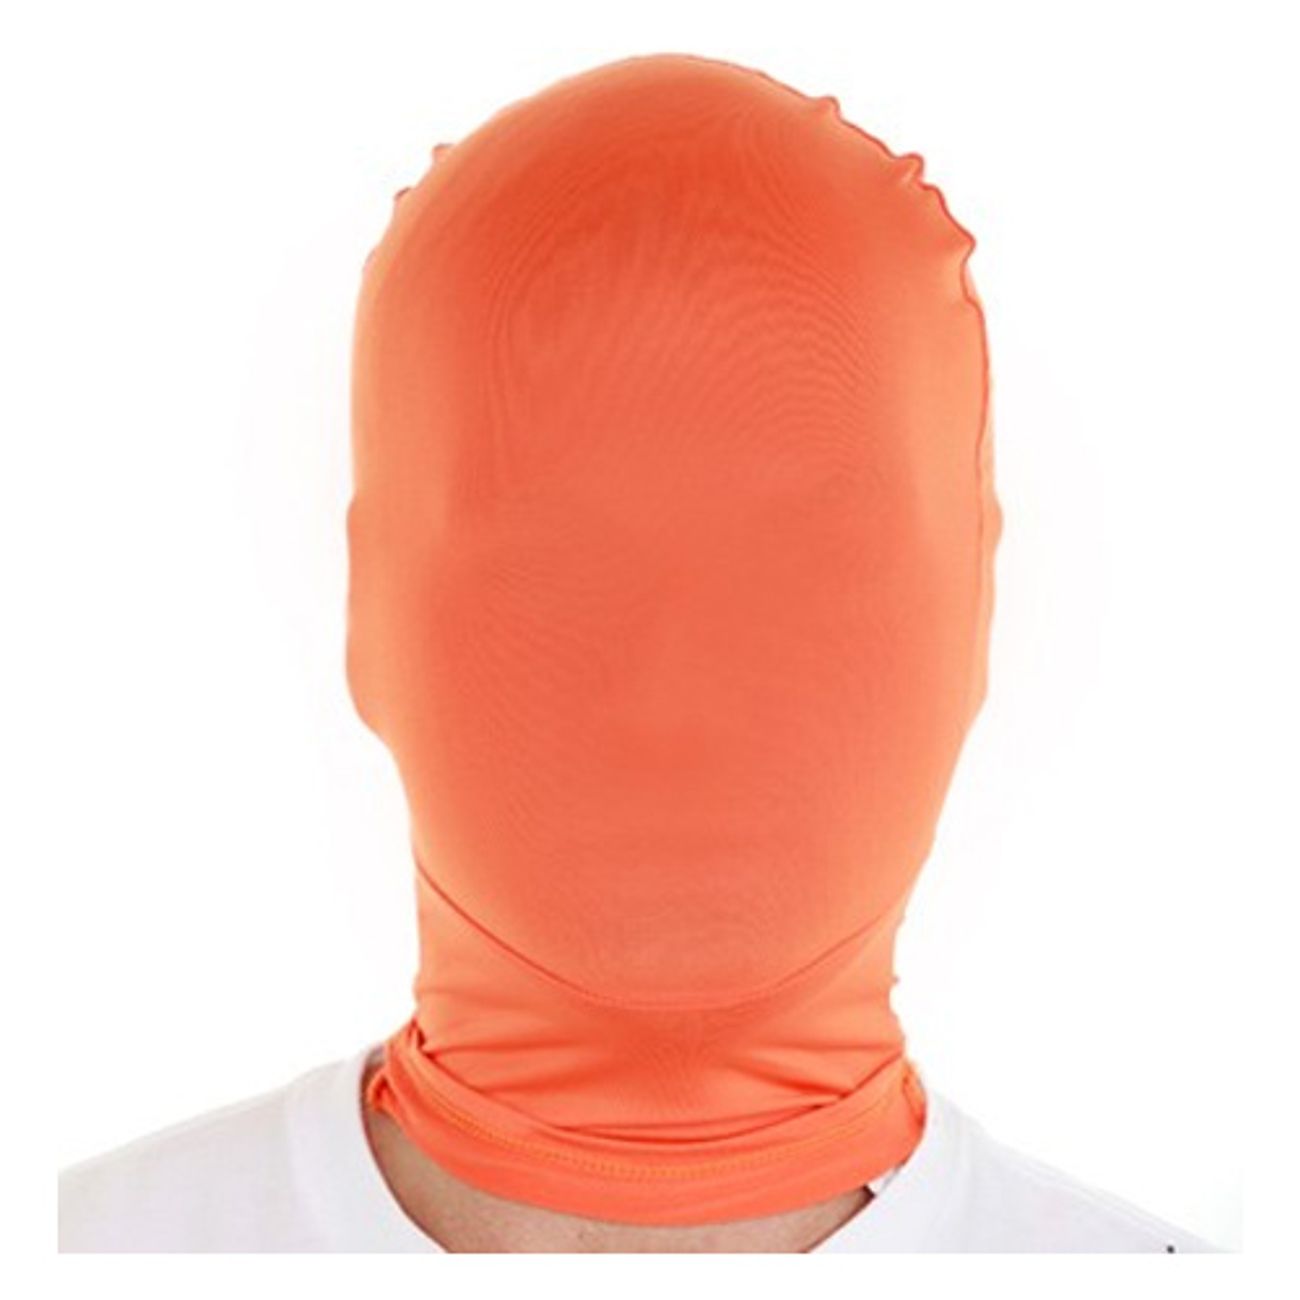 morphmask-orange-1